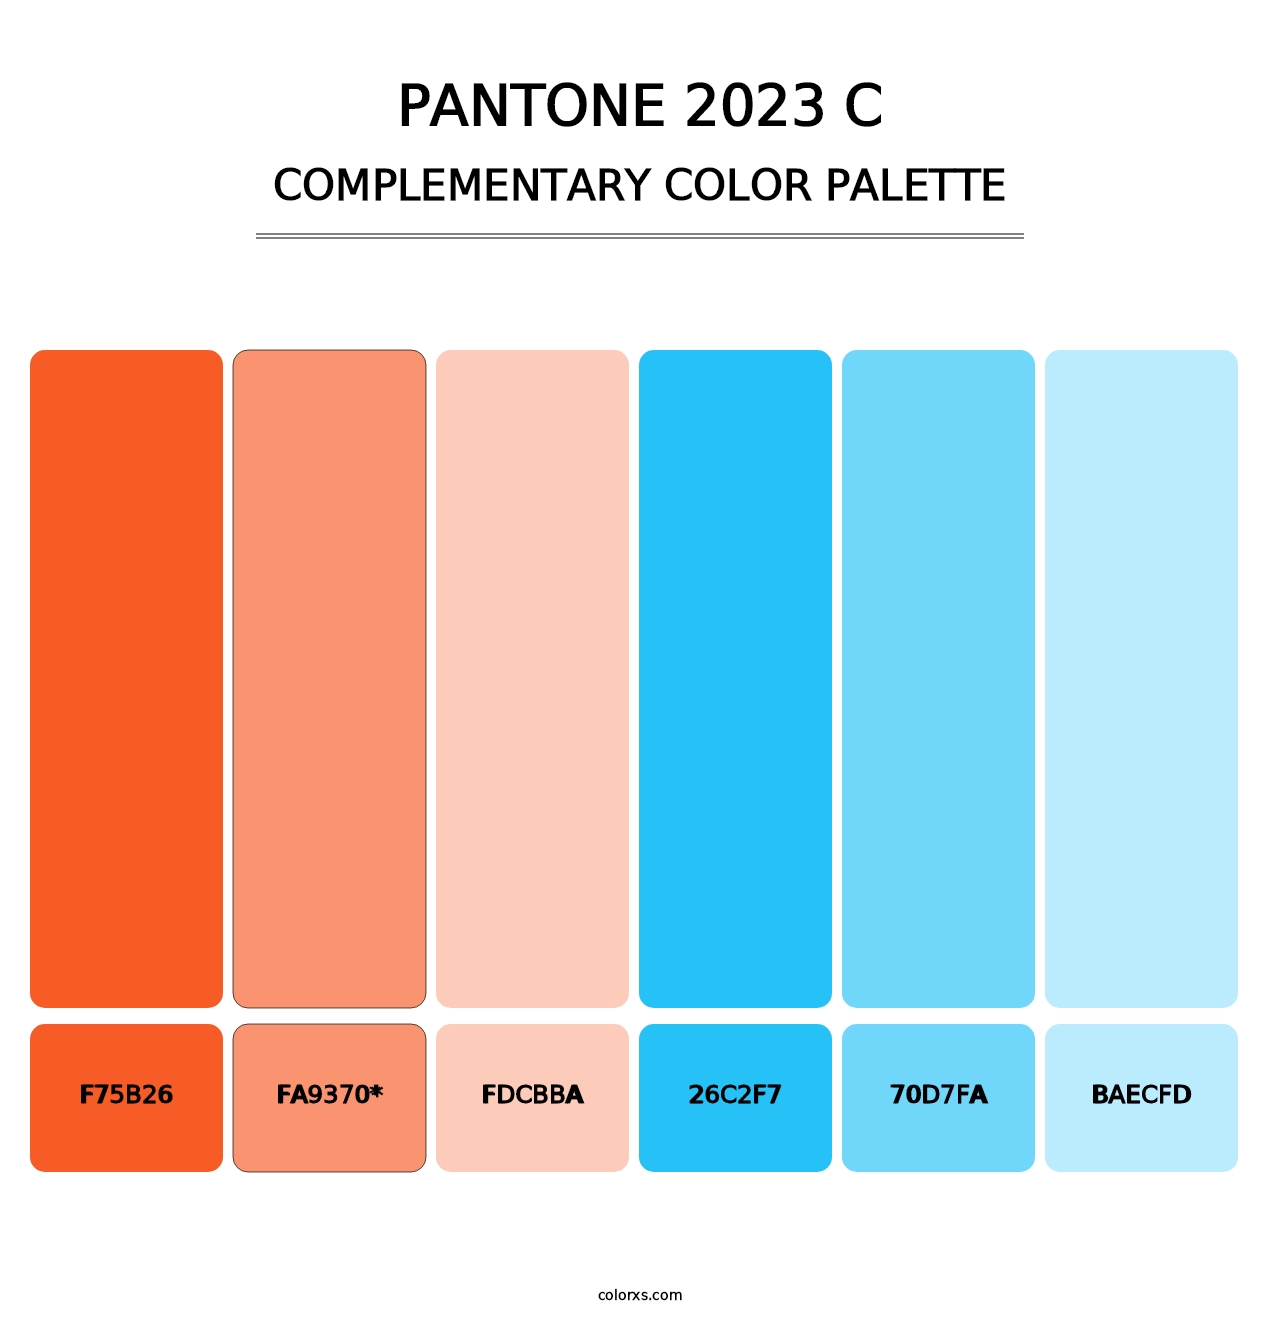 PANTONE 2023 C - Complementary Color Palette